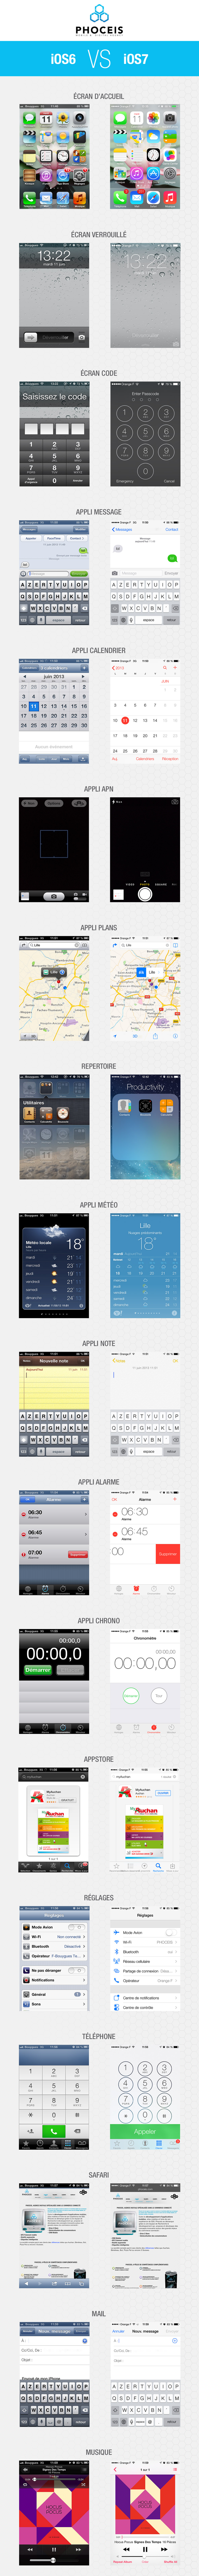 infographie visuel iOS 6 VS iOS 7